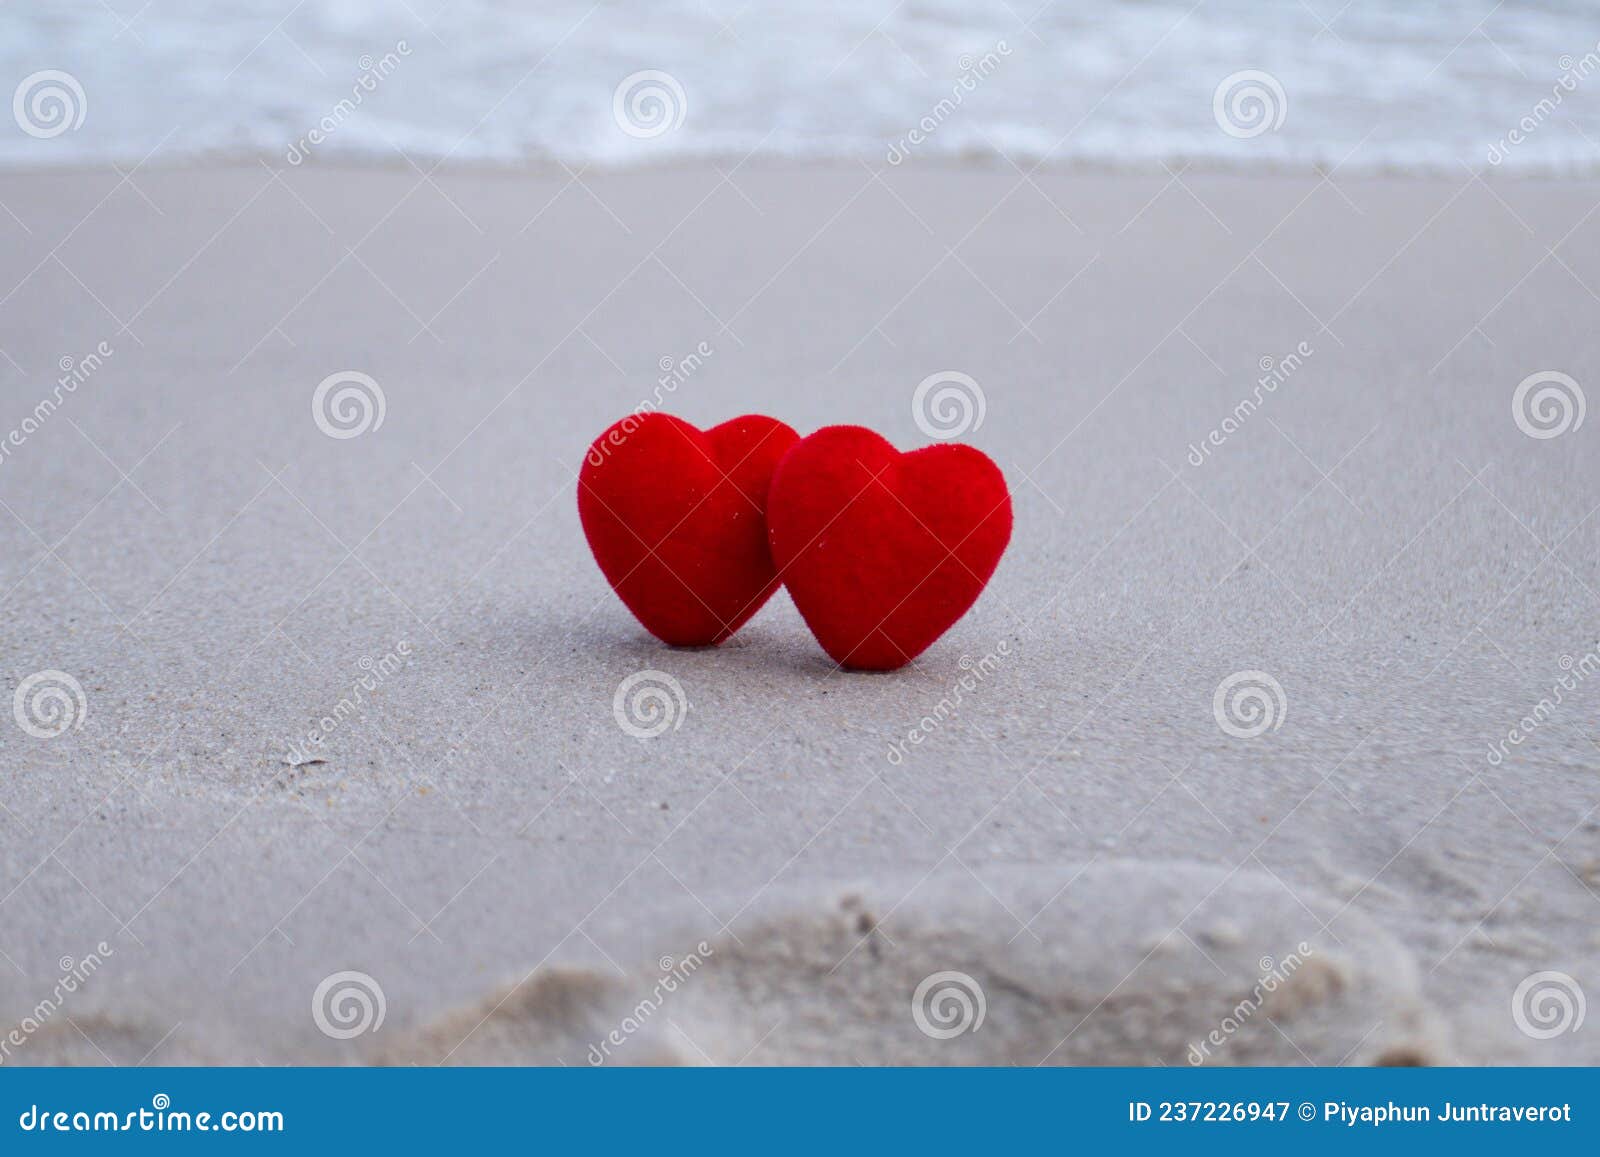 Red Heart On Sandy Beach Word Stock Photo 1161487648